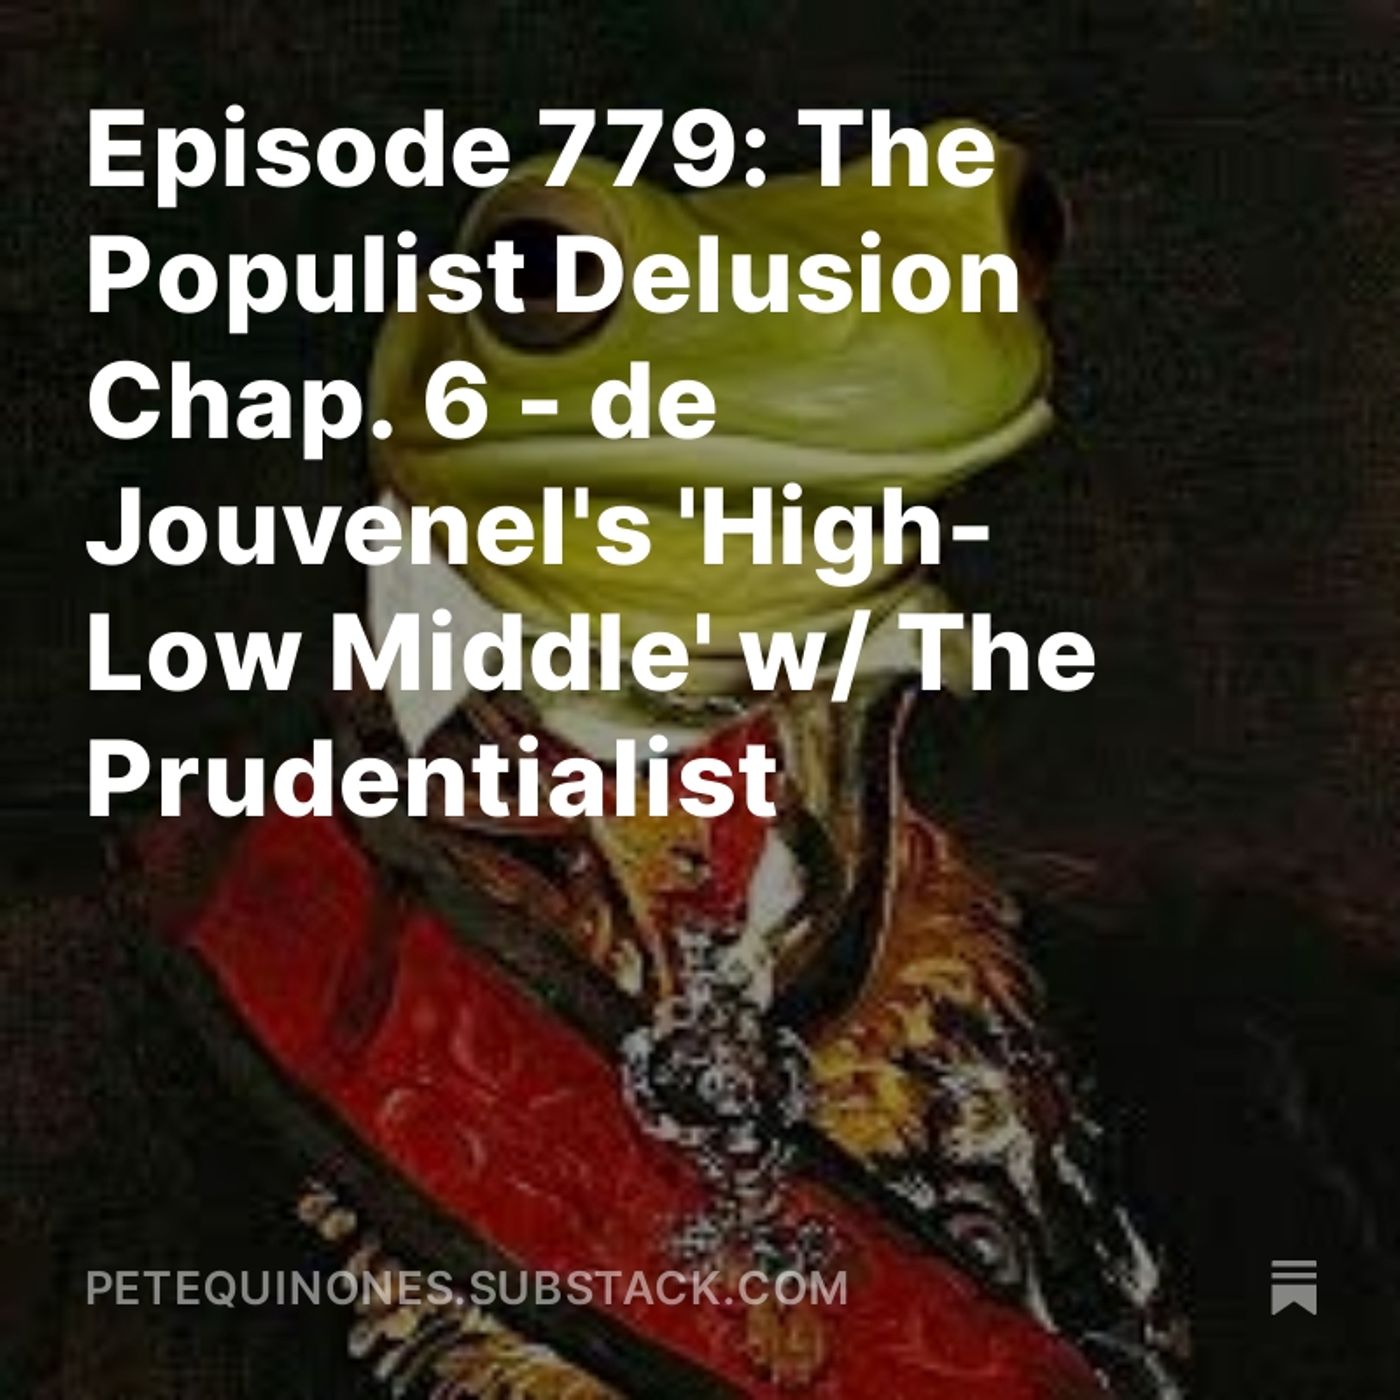 Episode 779: The Populist Delusion Chap. 6 - de Jouvenel's 'High-Low Middle' w/ The Prudentialist